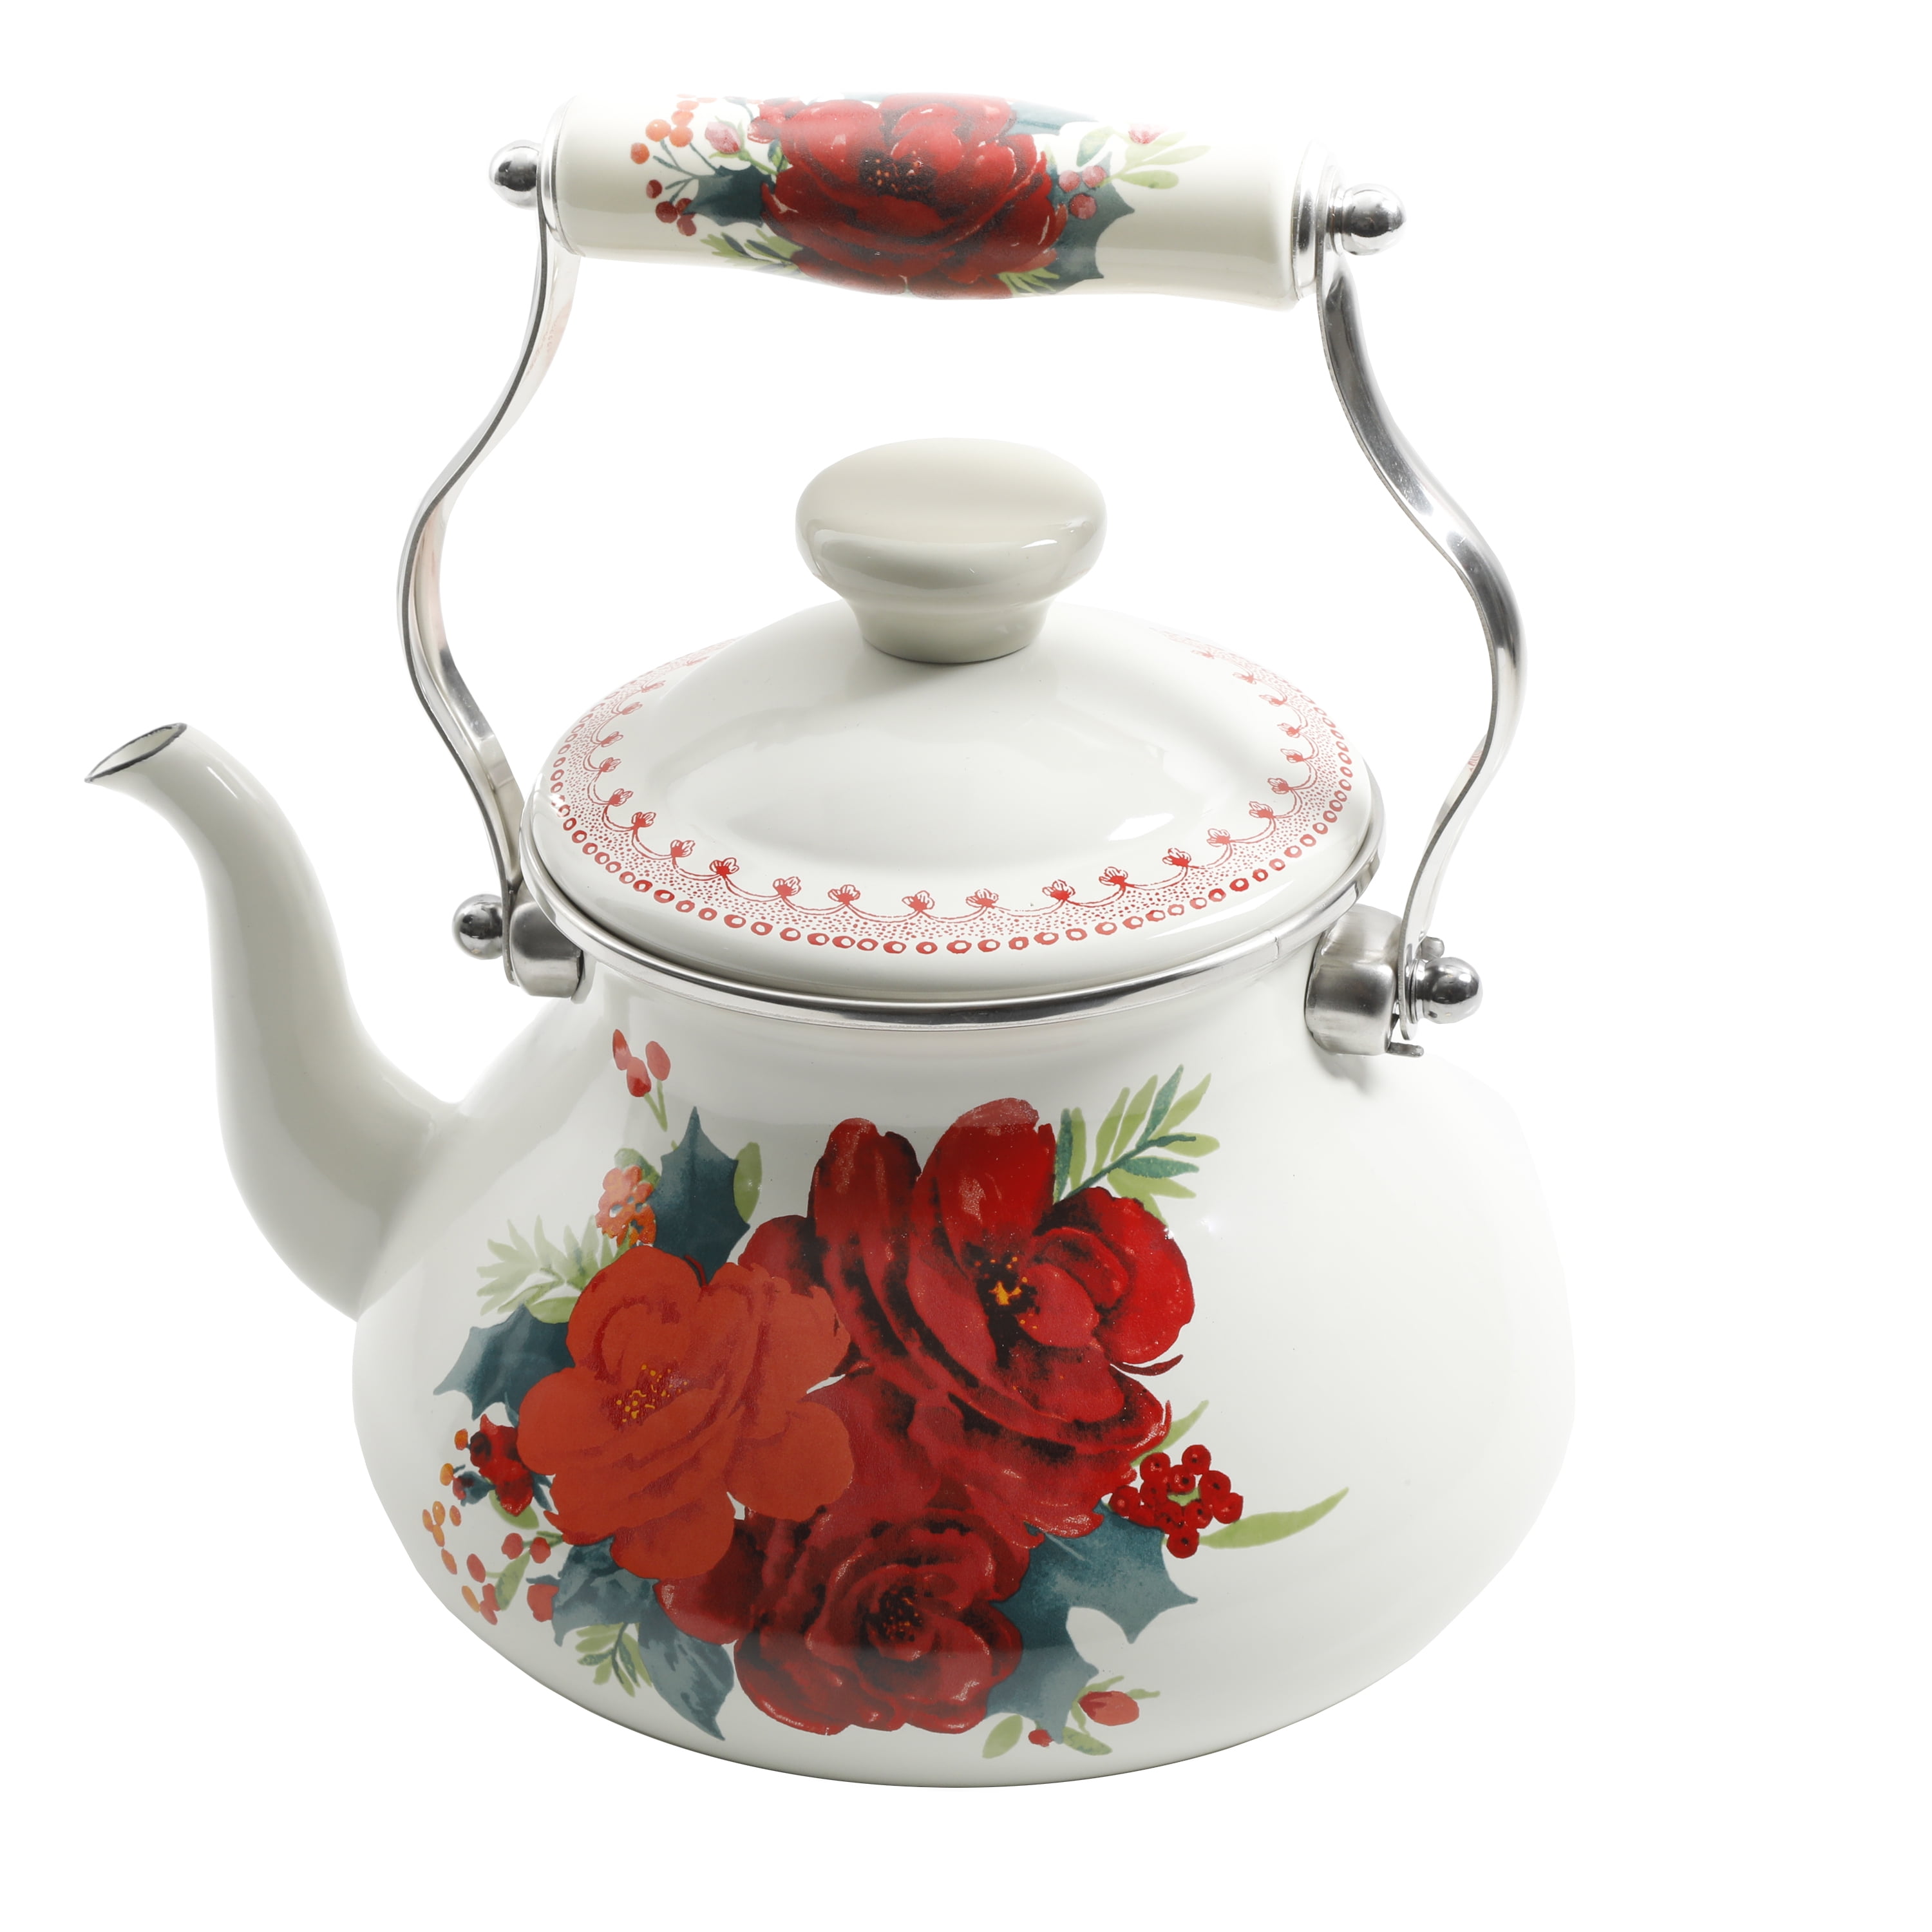 The Pioneer Woman Cheerful Rose Enamel on Steel 1.9 Quart Tea Kettle, Size: 1.9qt